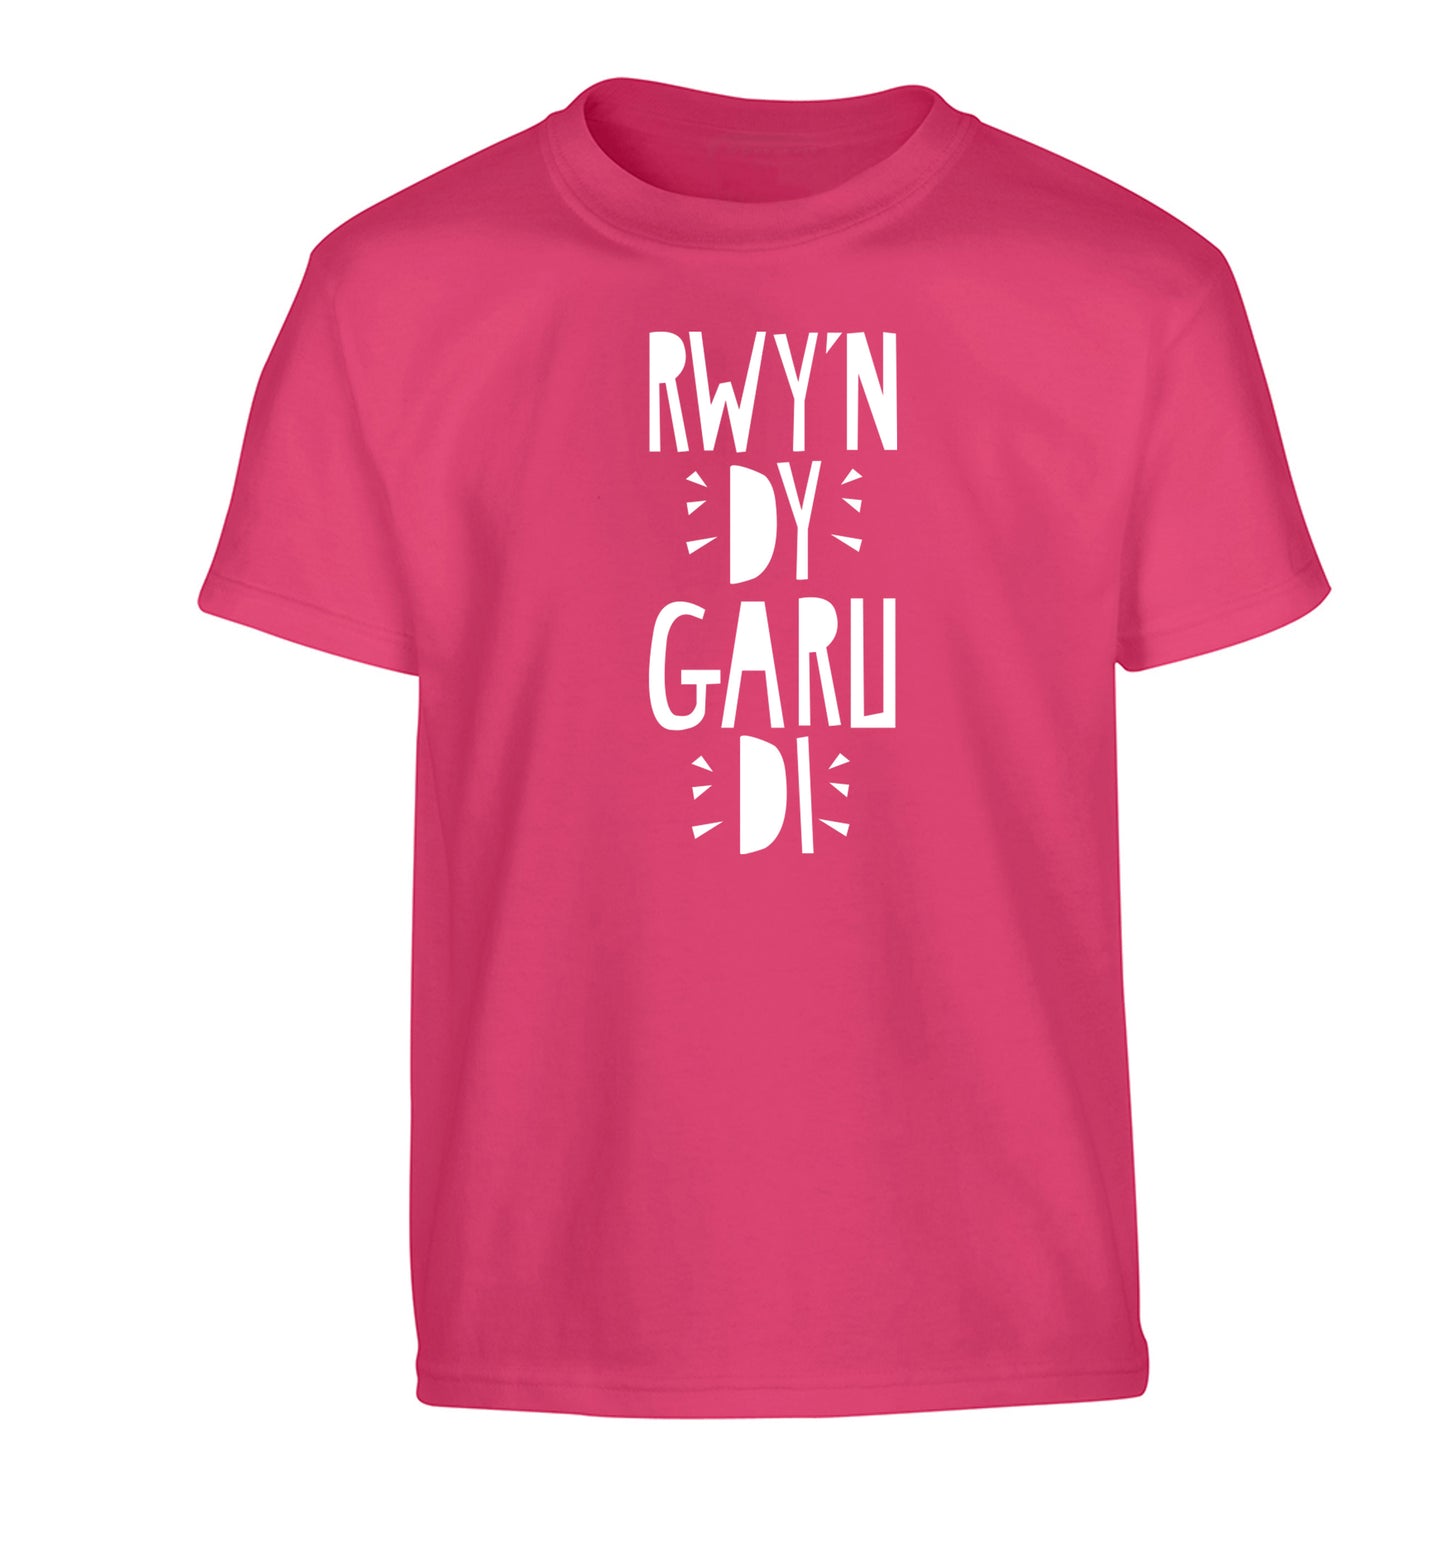 Rwy'n dy garu di - I love you Children's pink Tshirt 12-13 Years